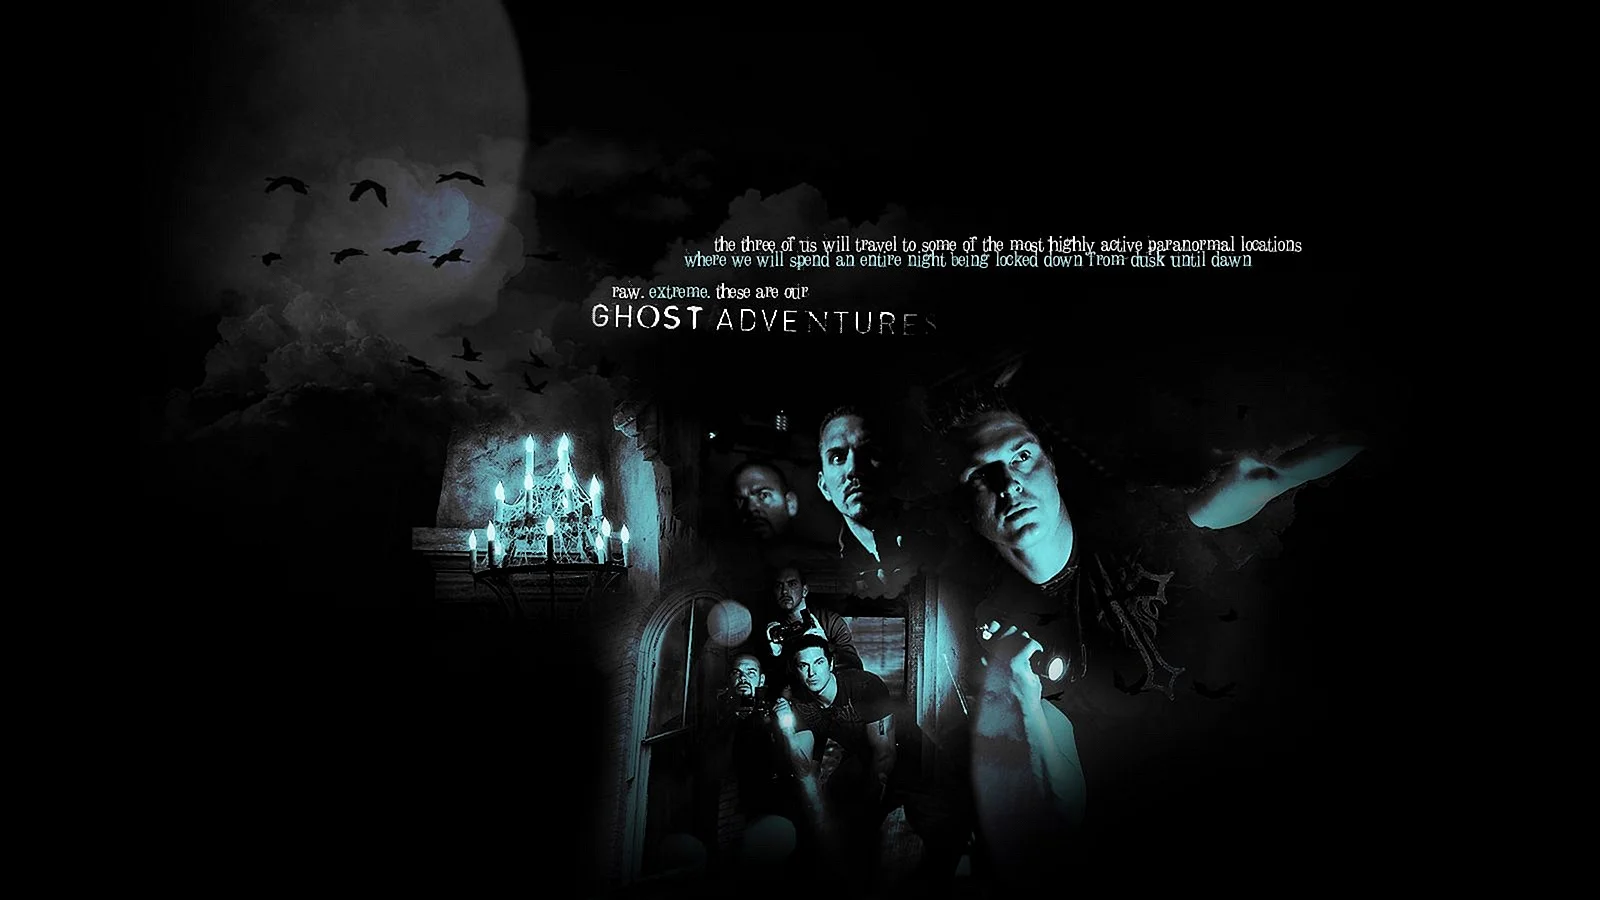 Ghost Adventures Logo Wallpaper